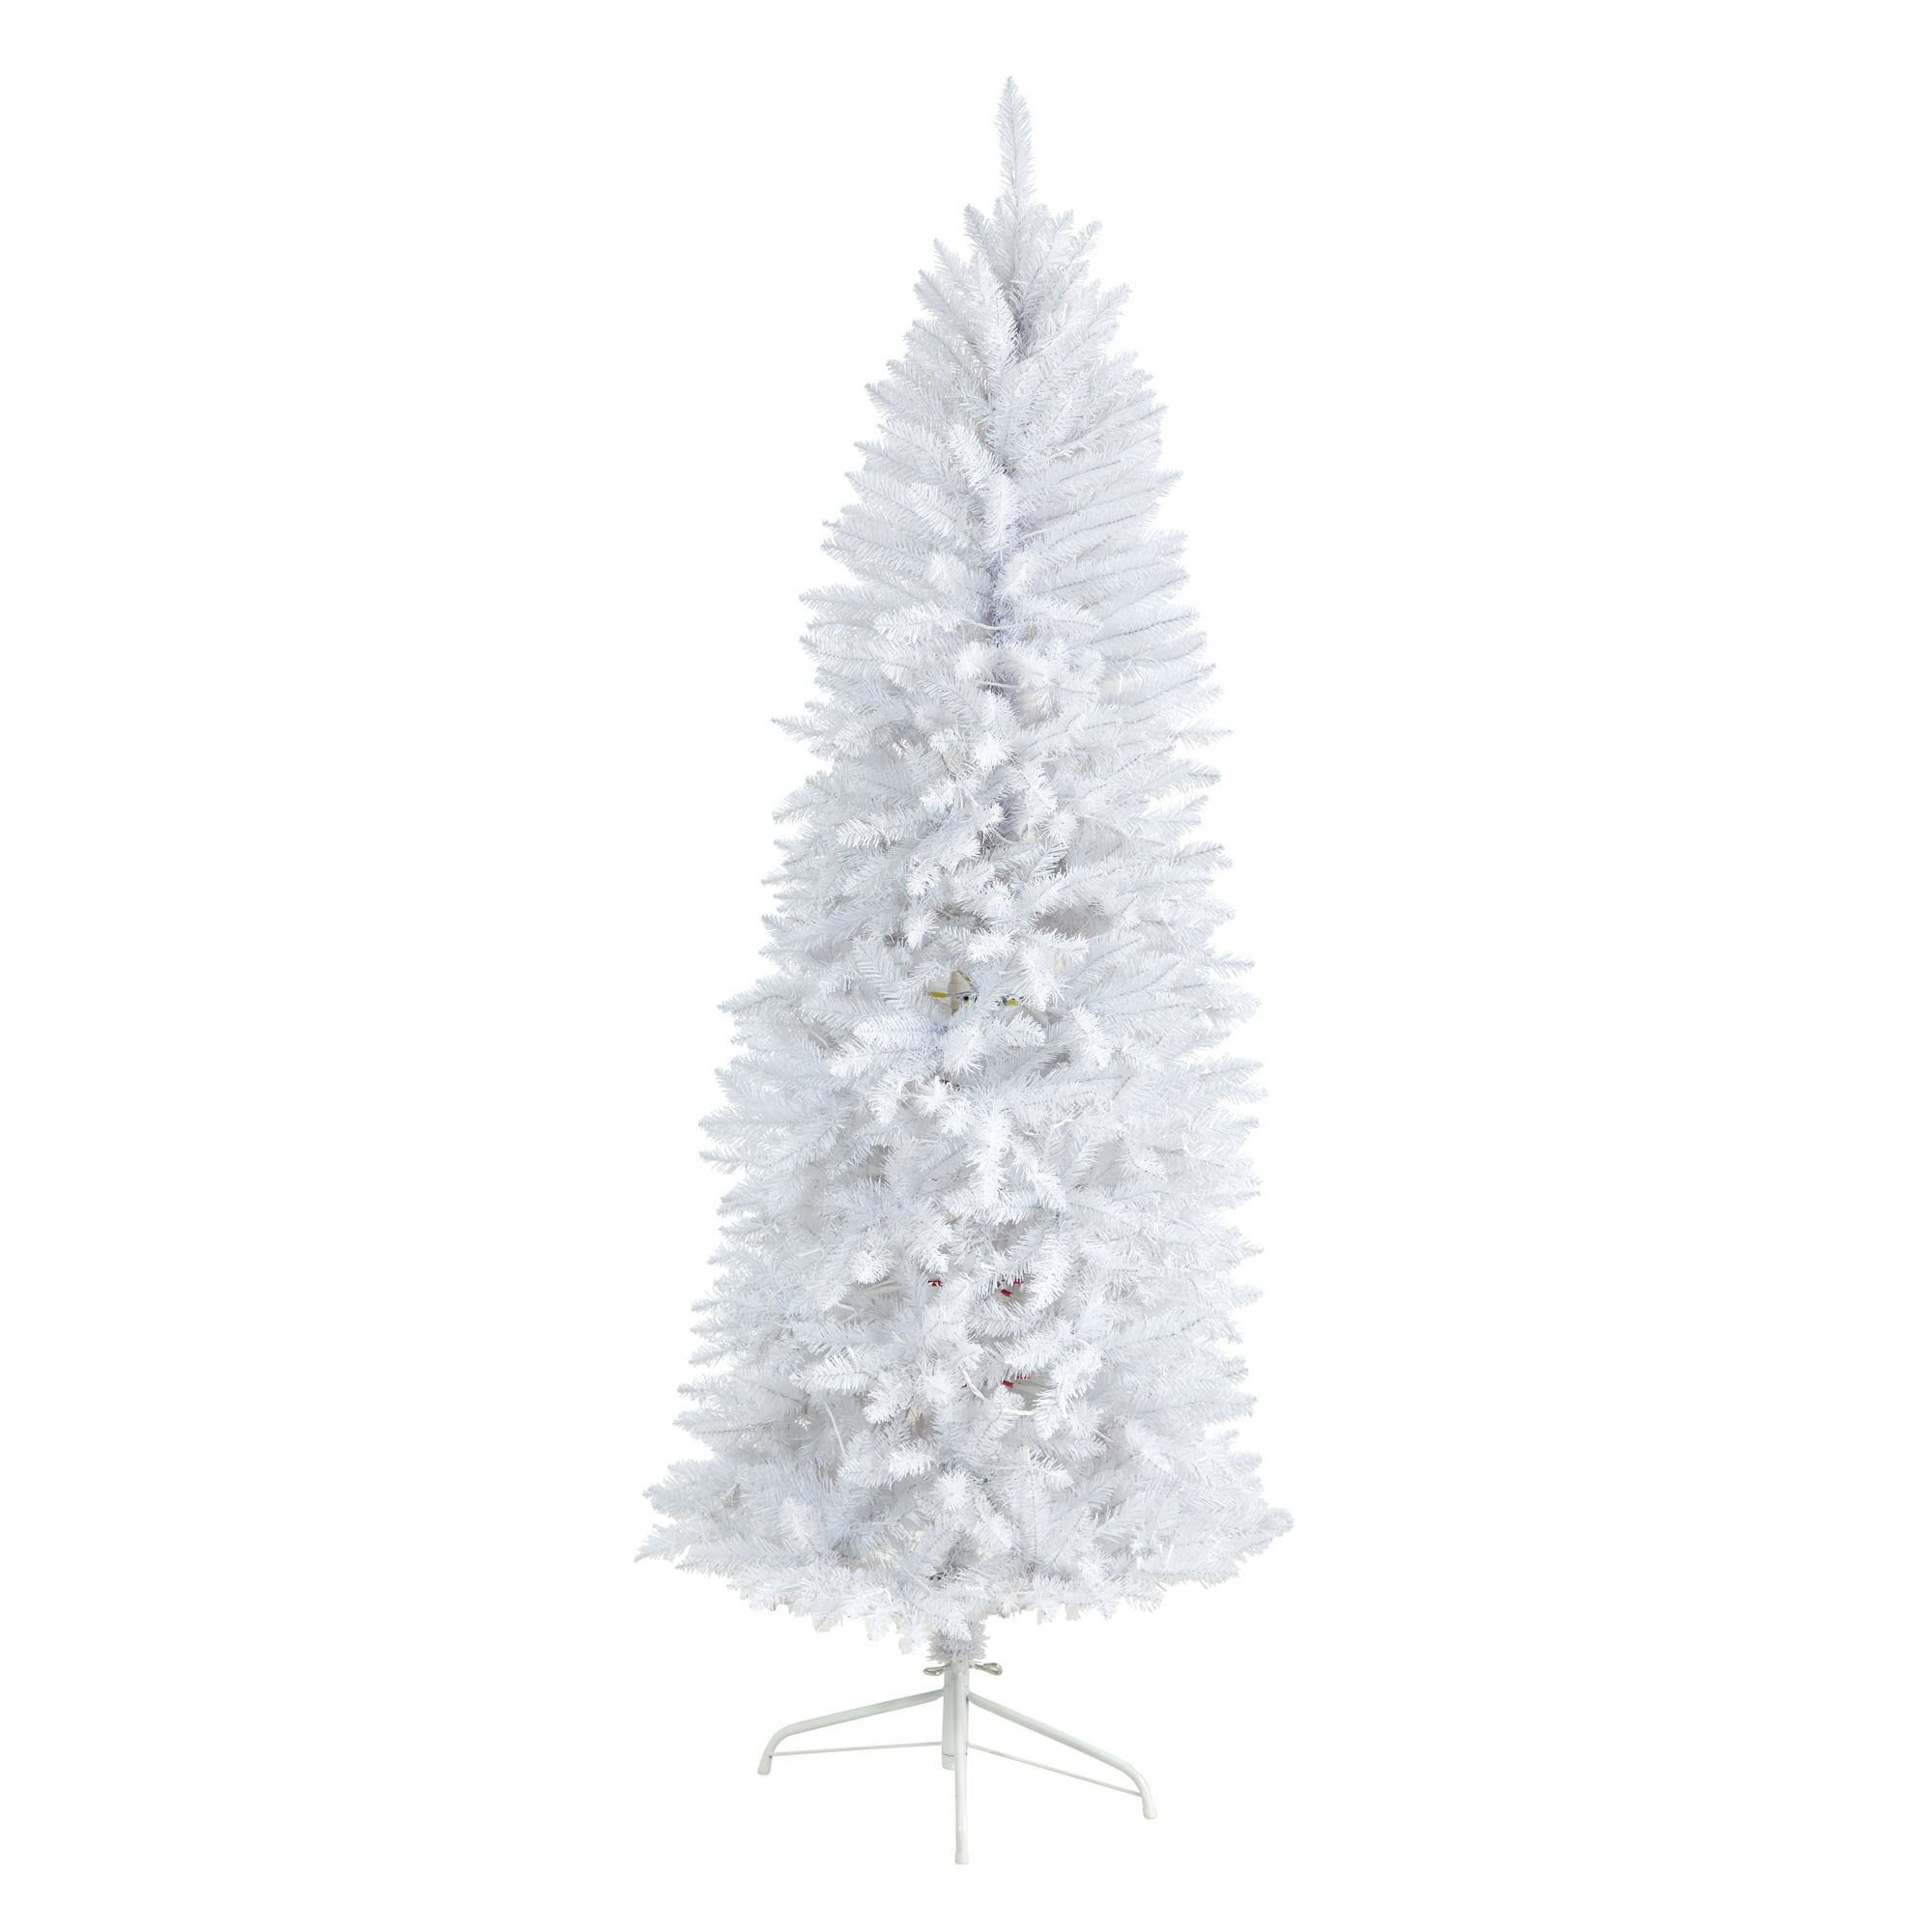 6ft. Pre-Lit White Artificial Christmas Tree, Warm White LED Lights